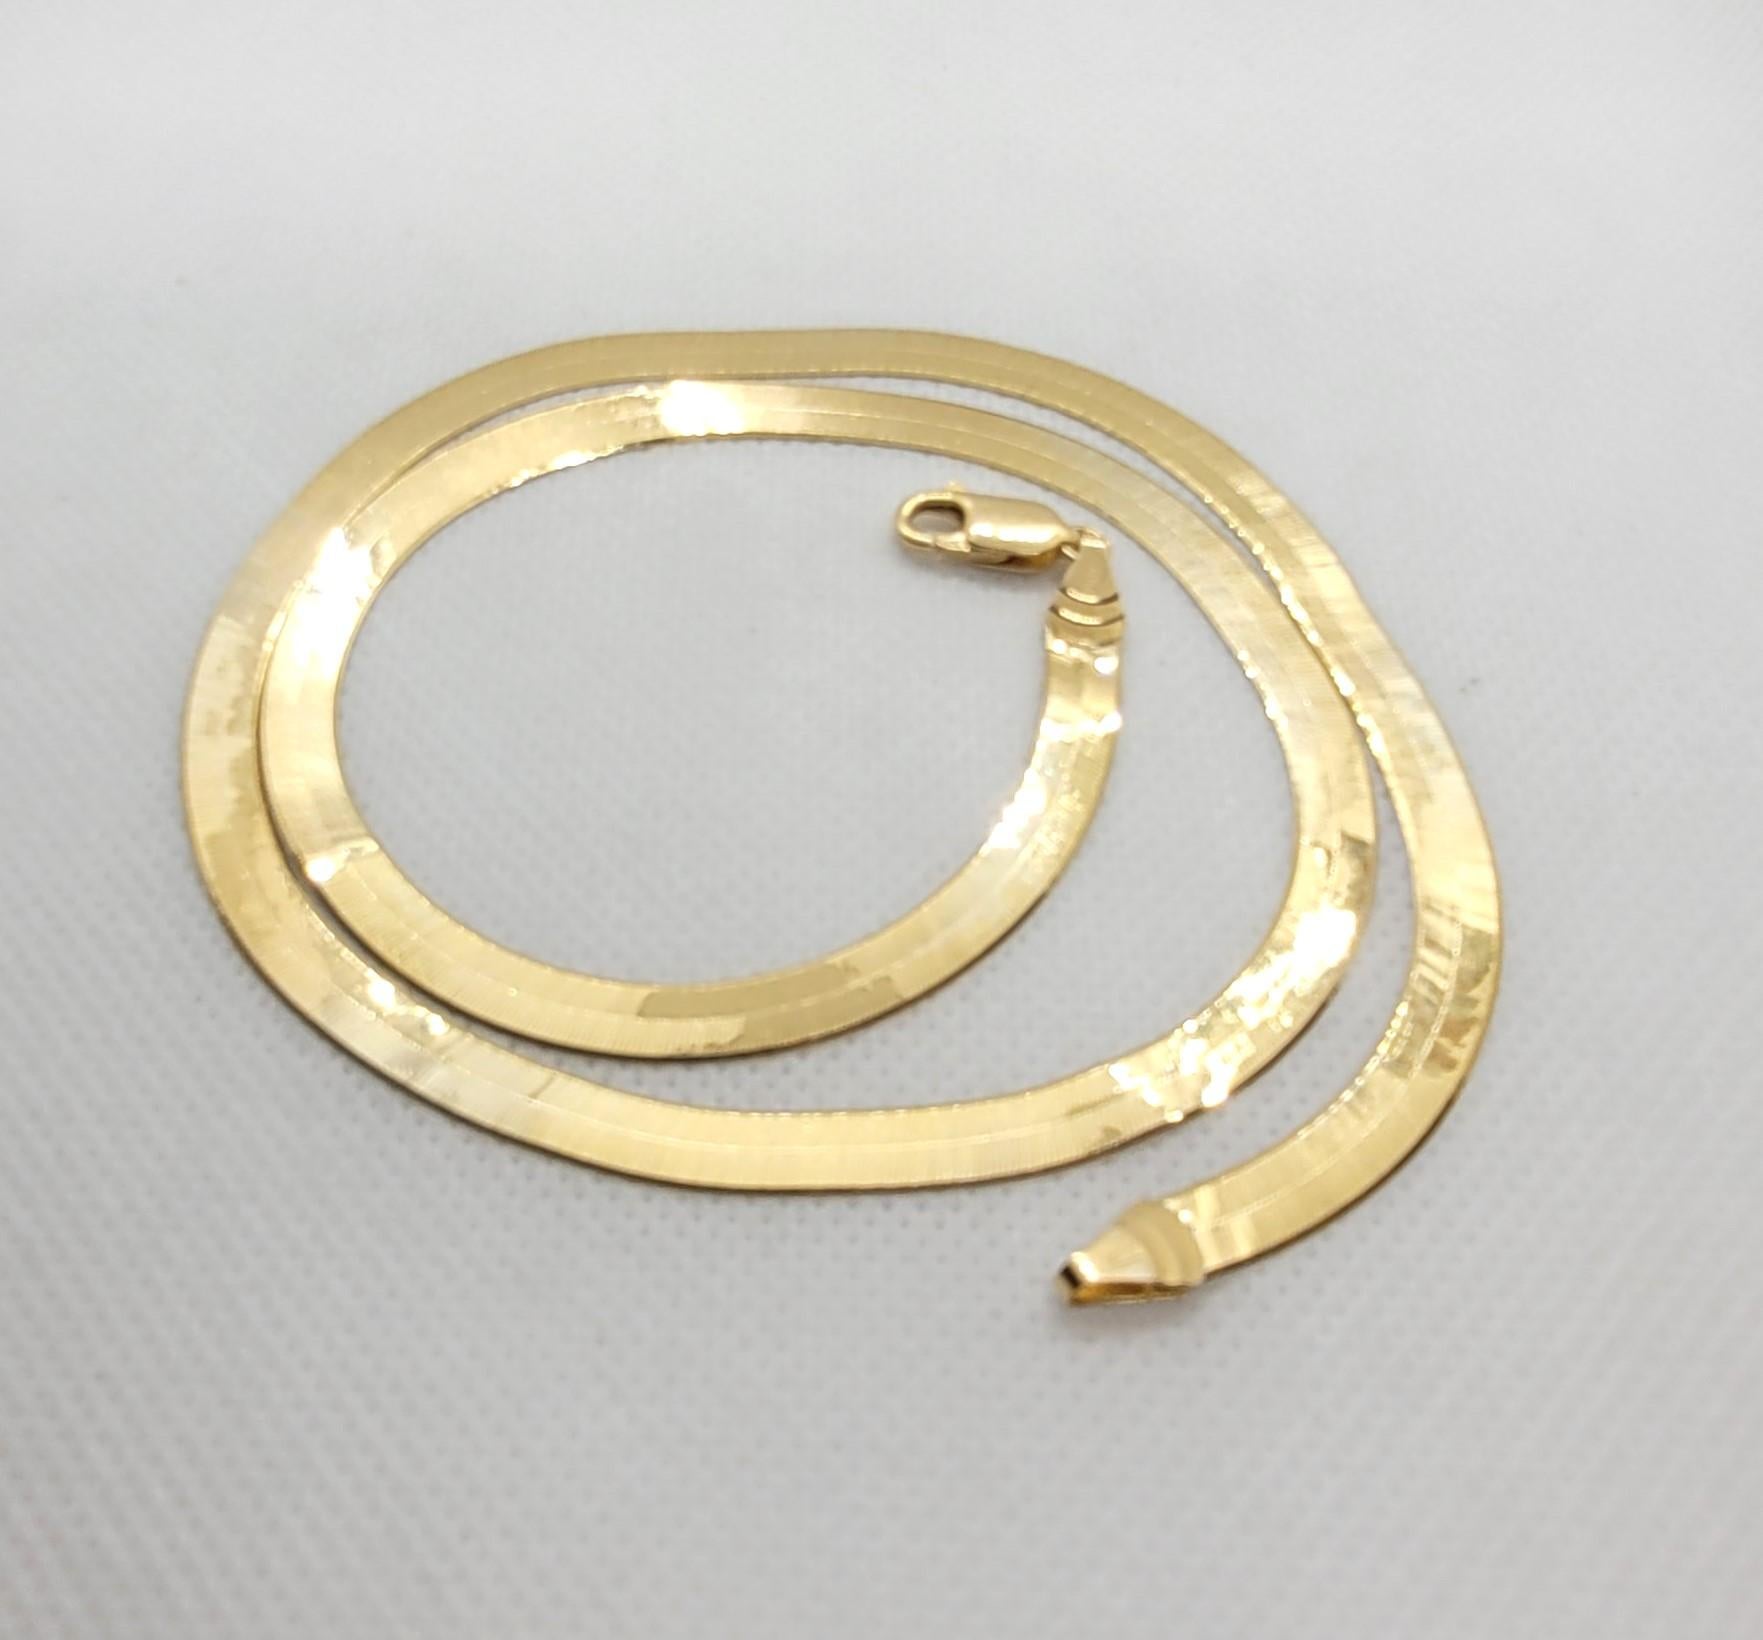 14k gold herringbone necklace made in italy